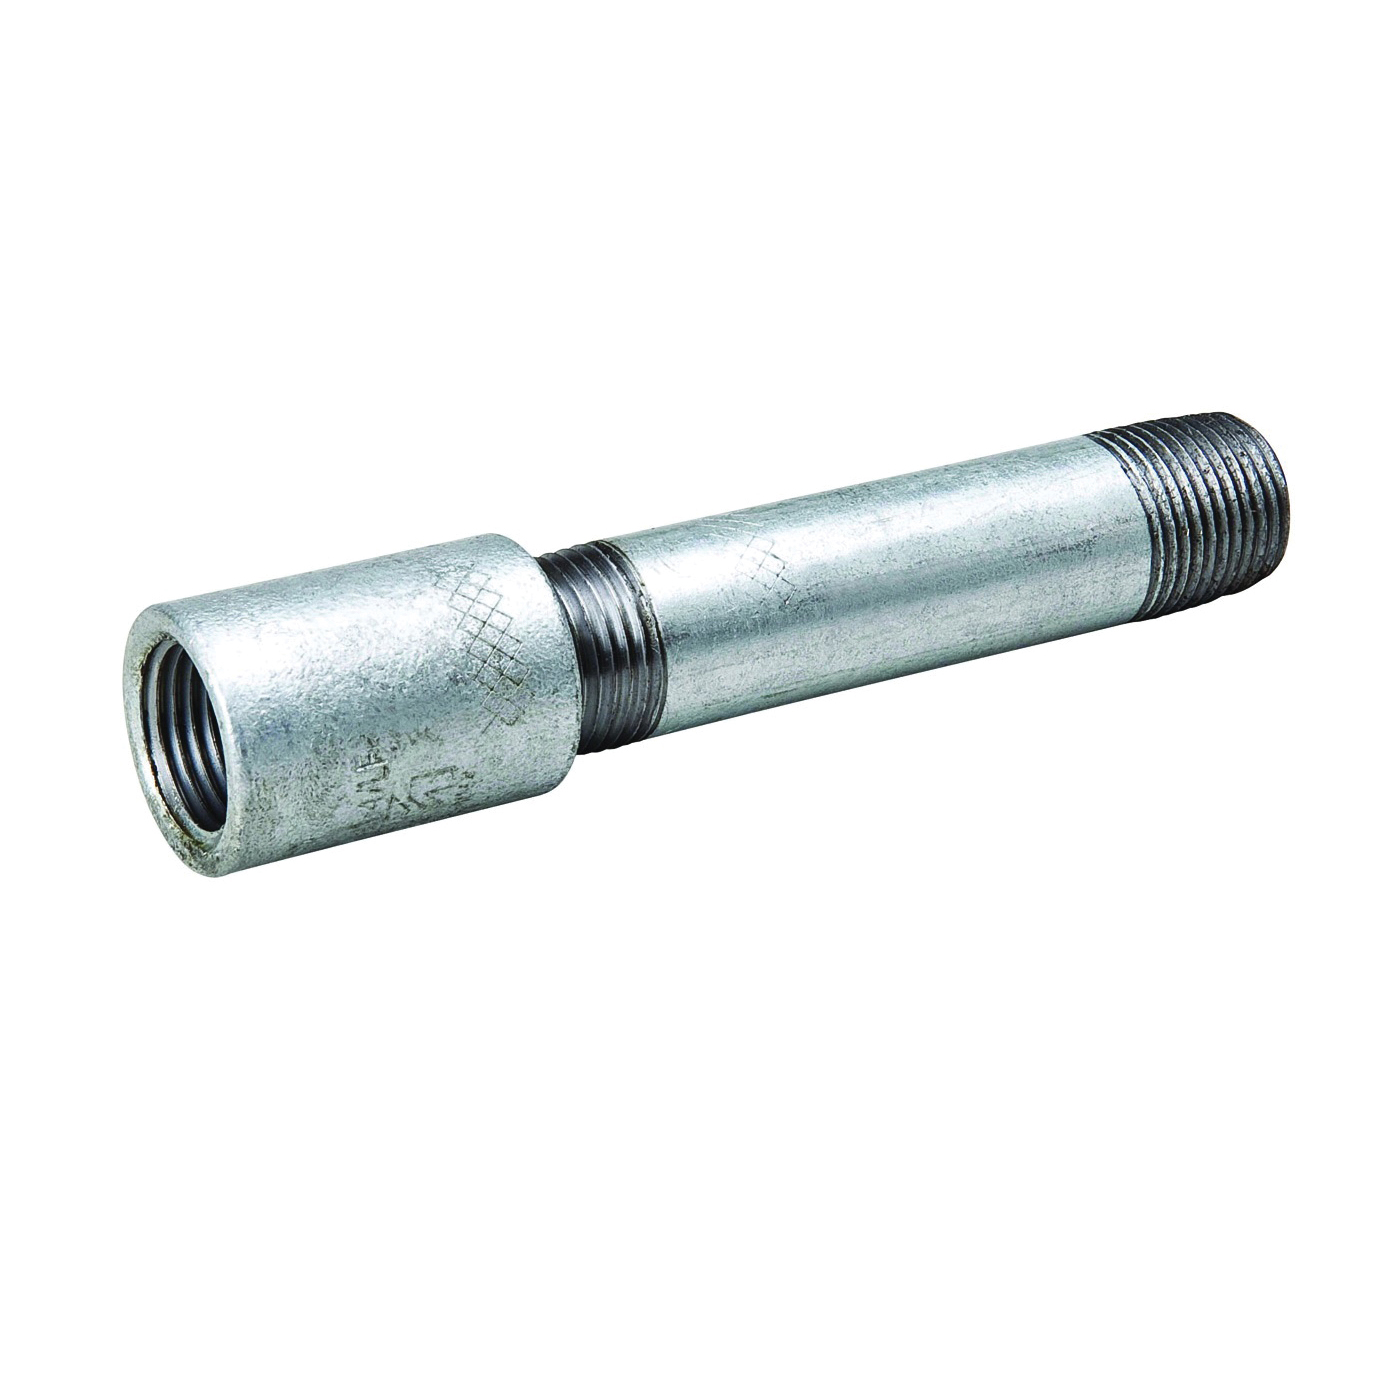 563-540HN Pipe Nipple, 1/2 in, Threaded, Steel, 150 psi Pressure, 4 in L